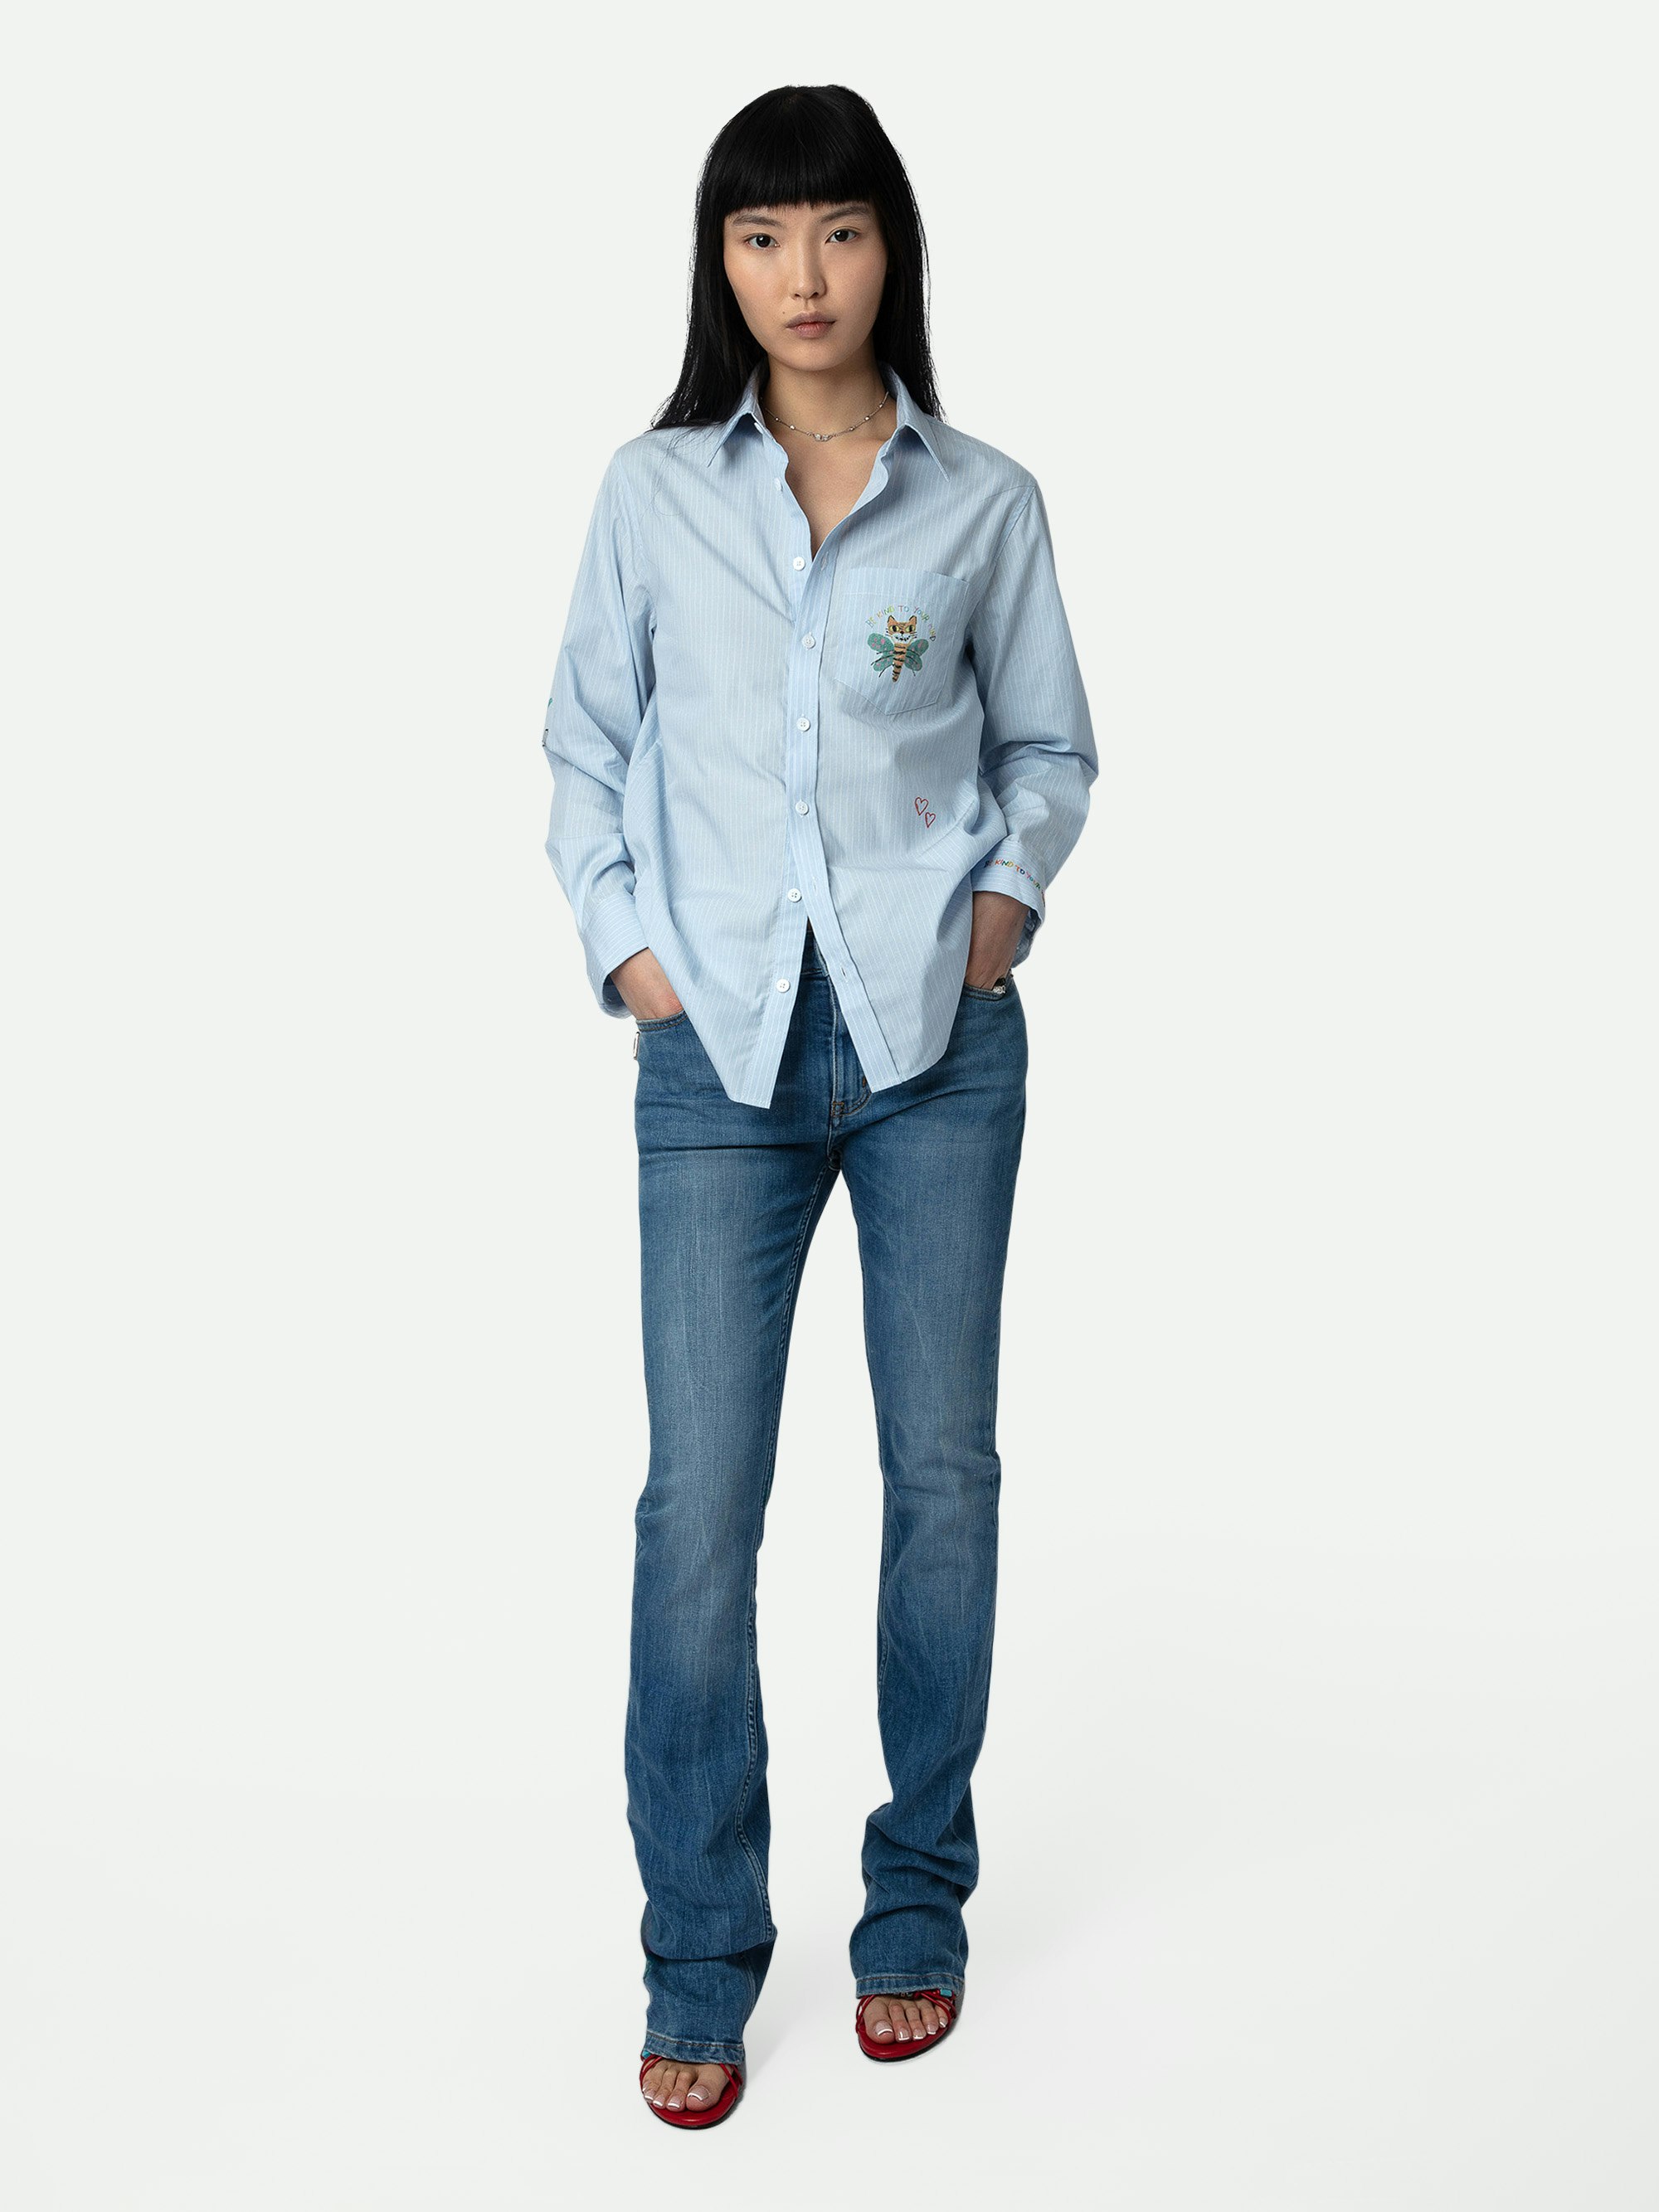 Camicia Taskiz - Camicia in cotone blu a maniche lunghe, righe e personalizzazioni create da Humberto Cruz.